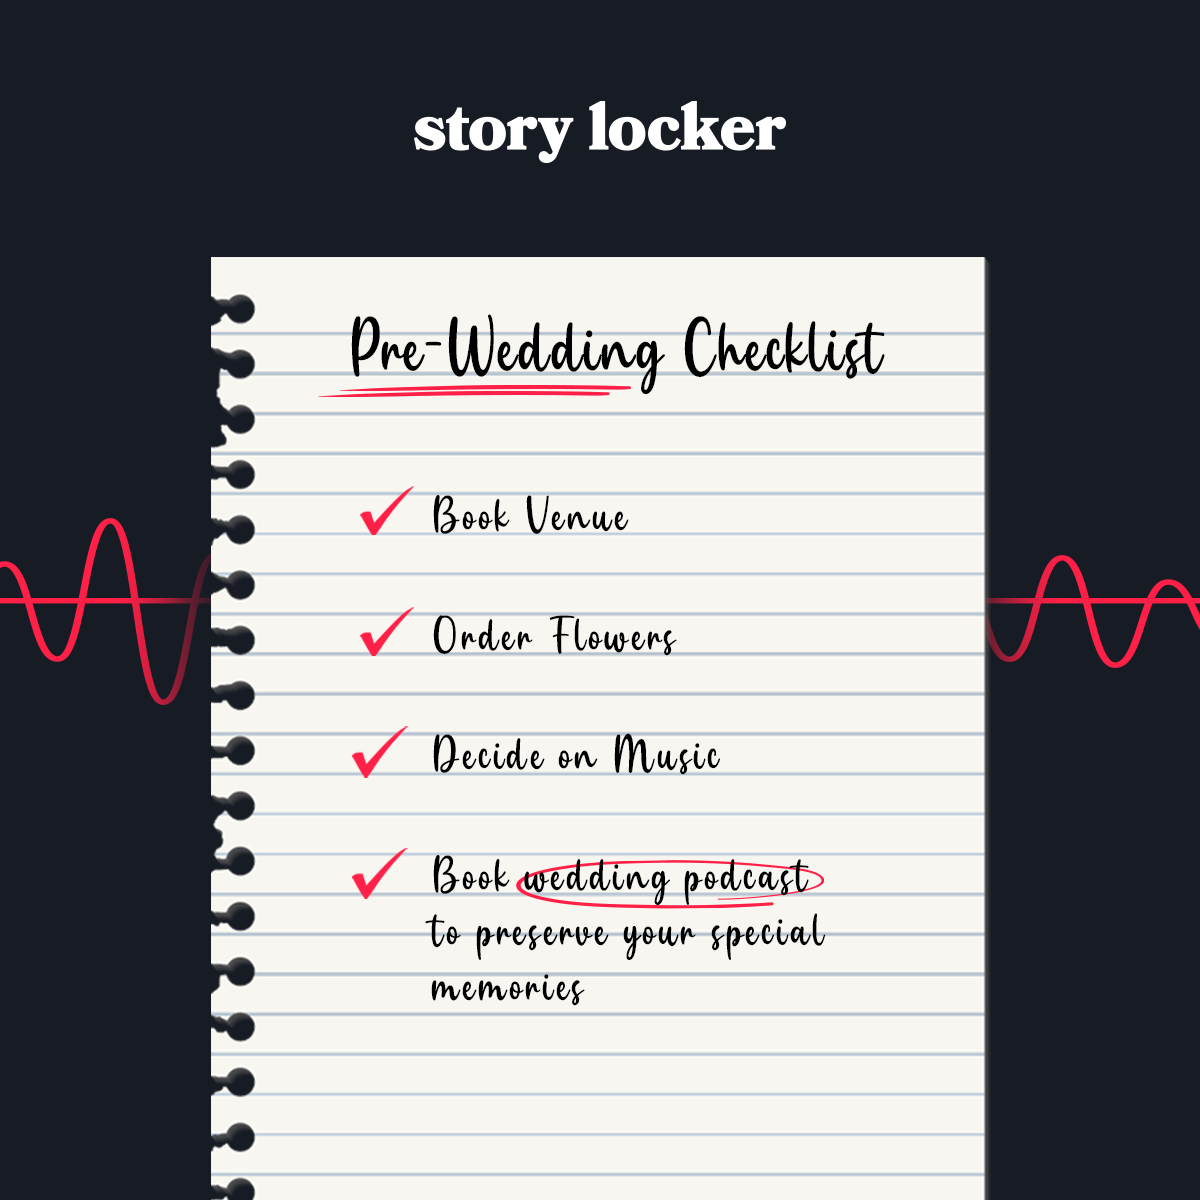 pre wedding checklist promotional image by story locker